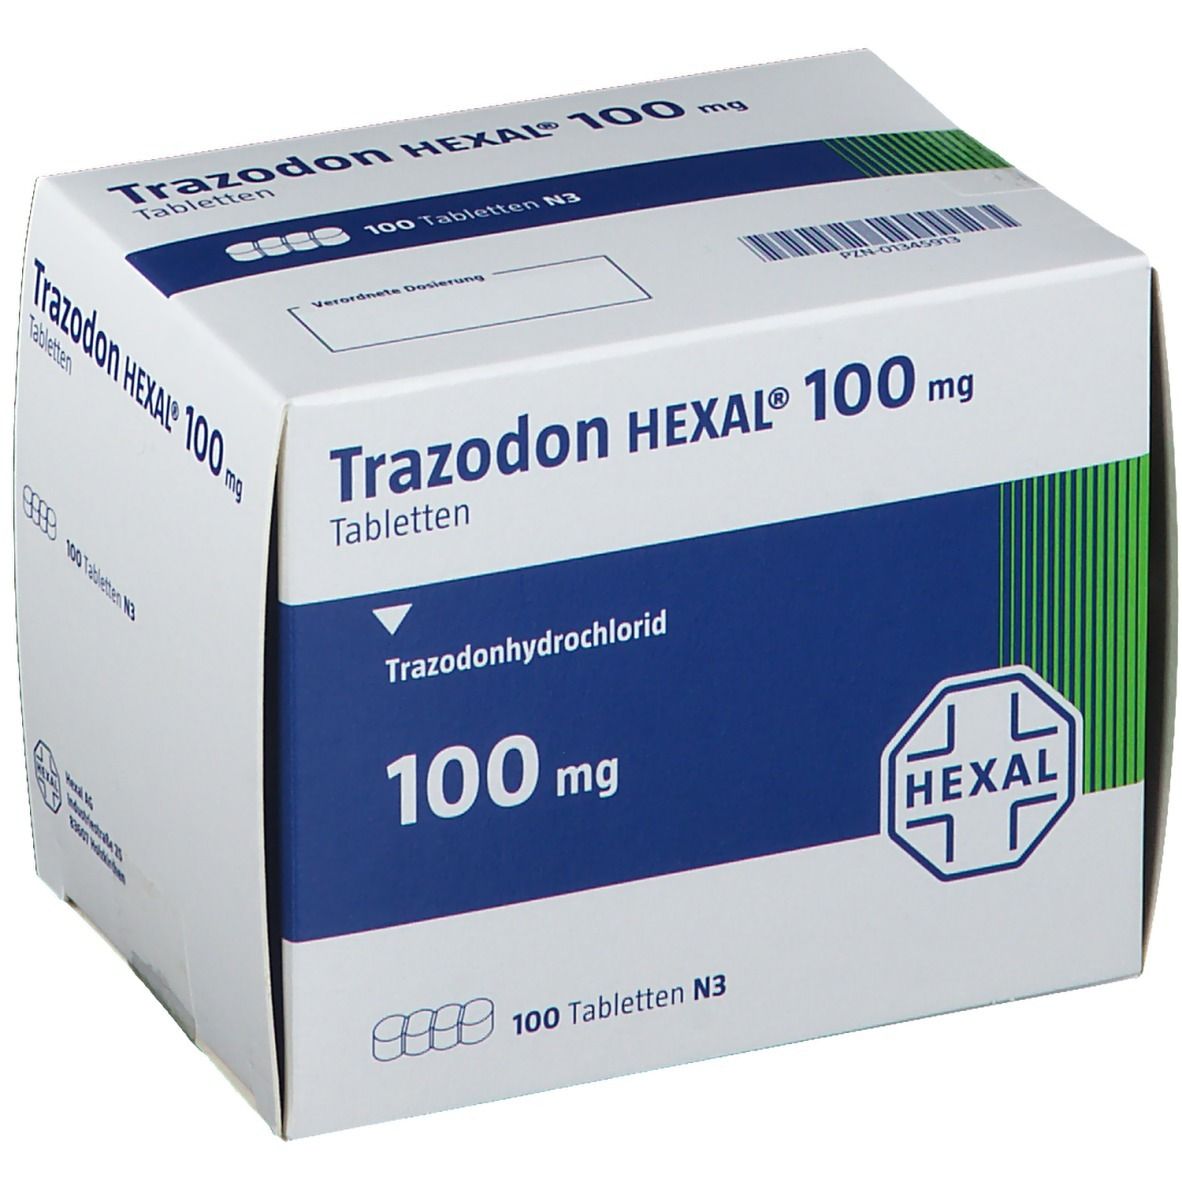 Trazodon HEXAL® 100 mg